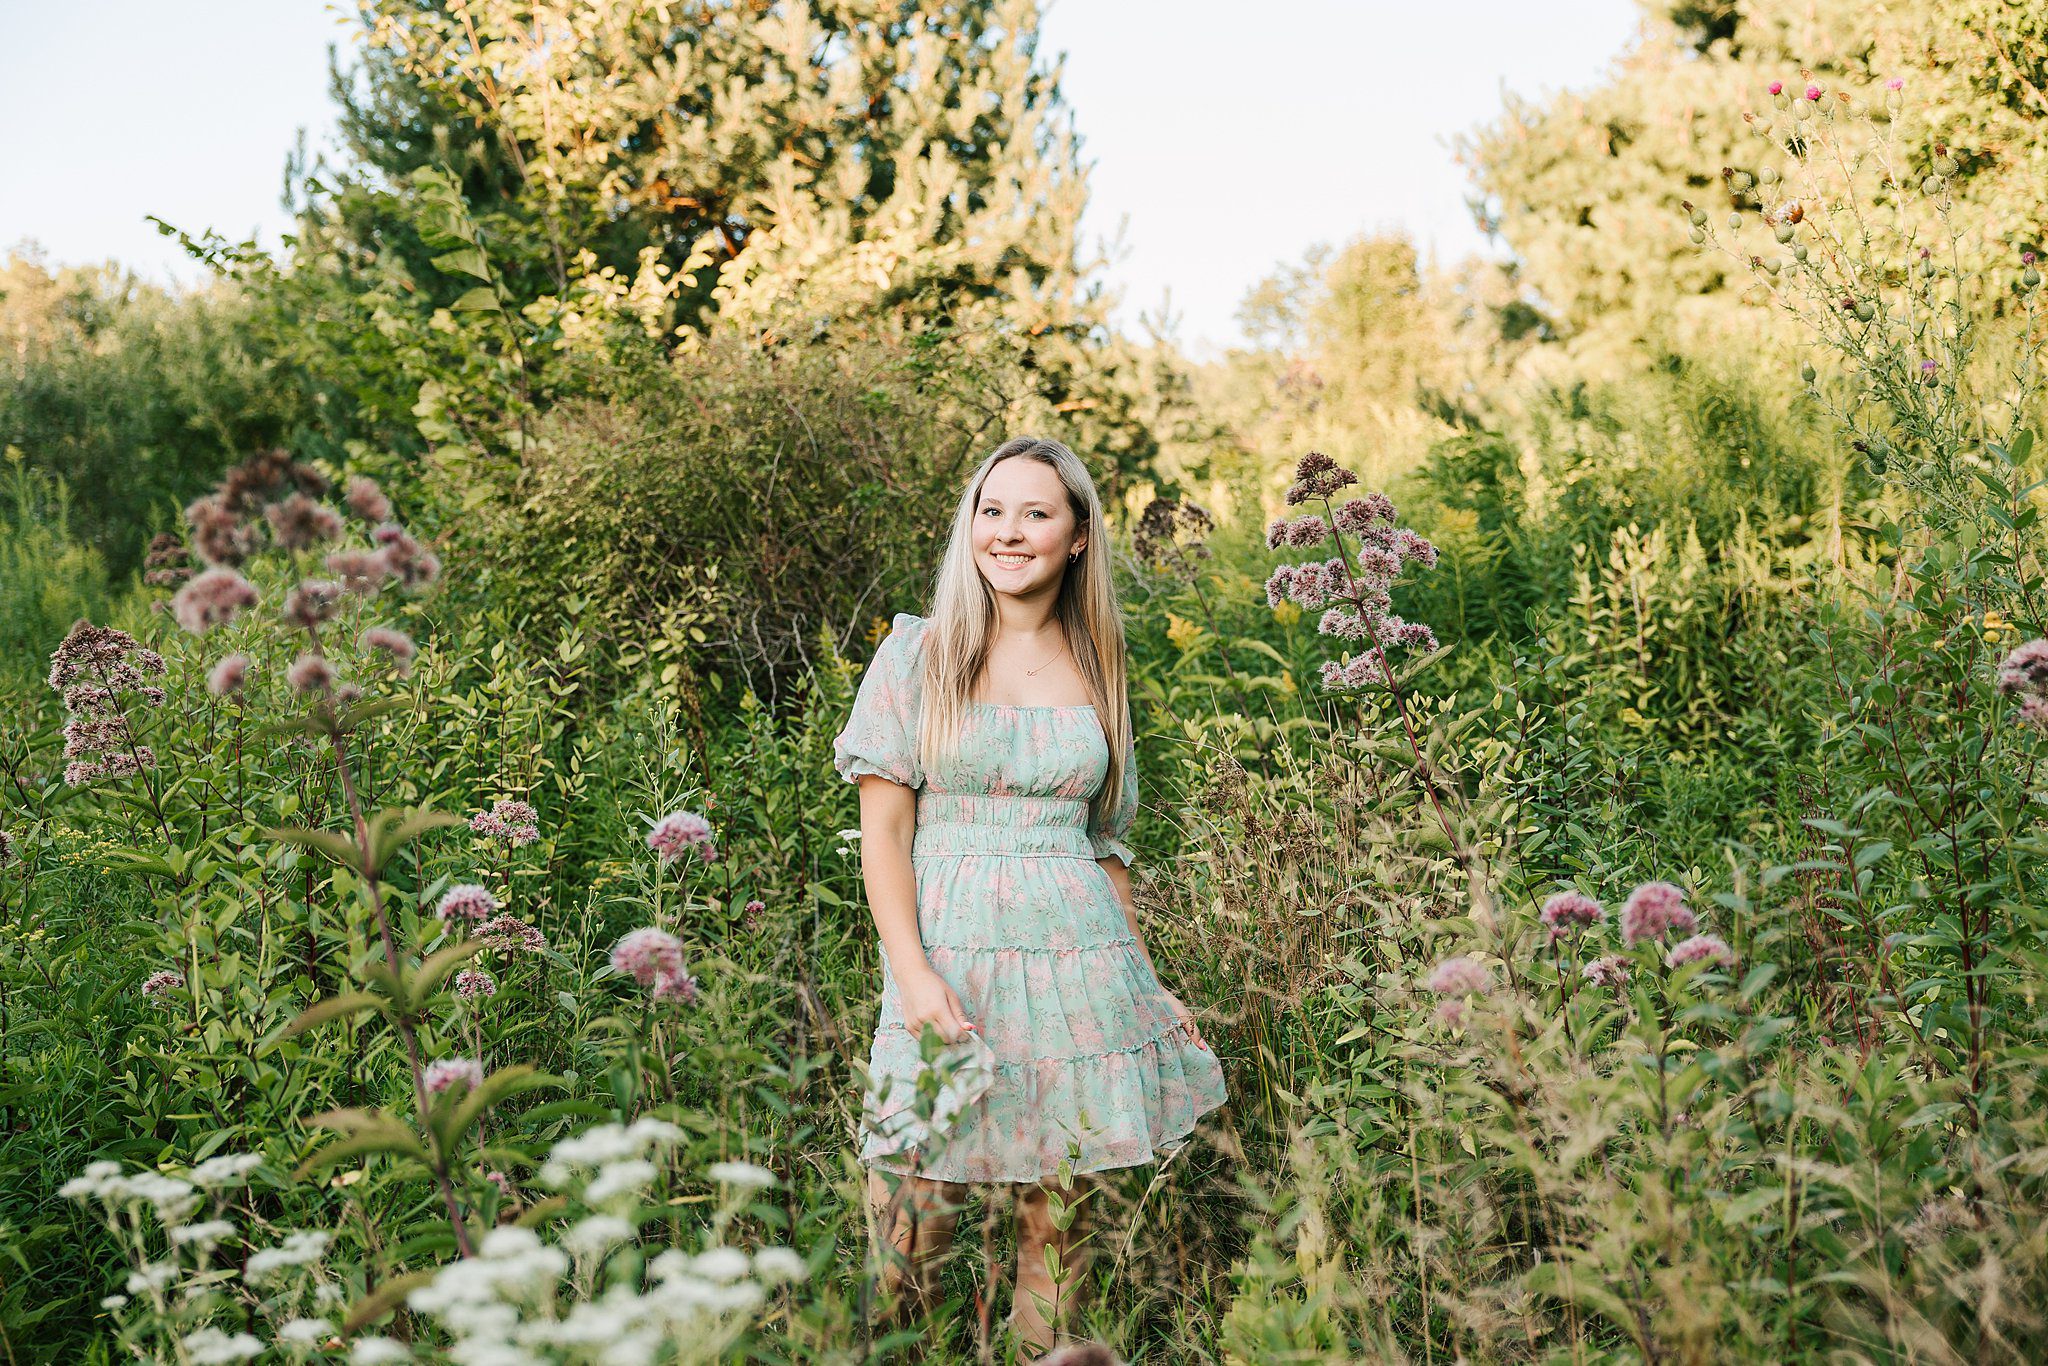 A high school senior in a green dress walks through tall flowering grasses at sunset